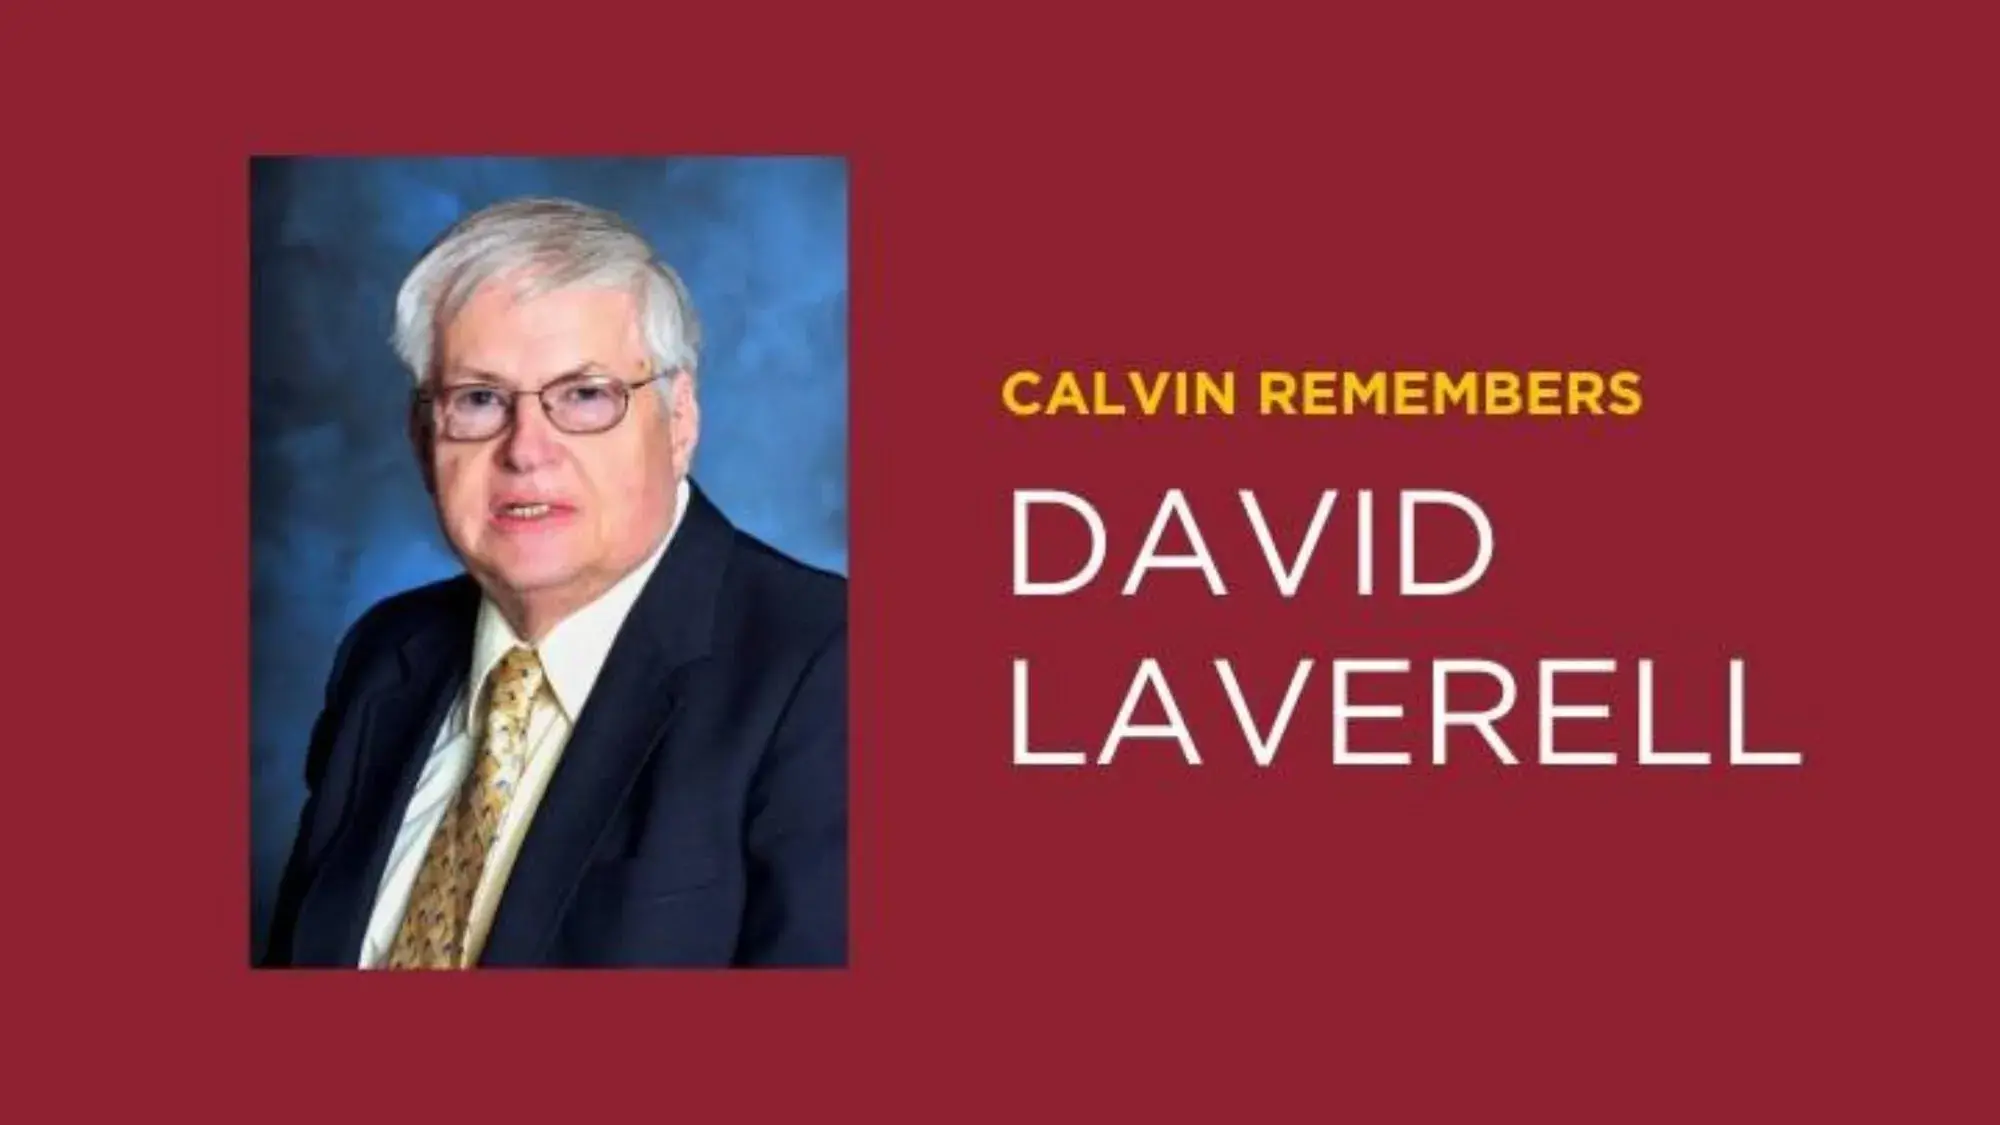 An image of David Laverell